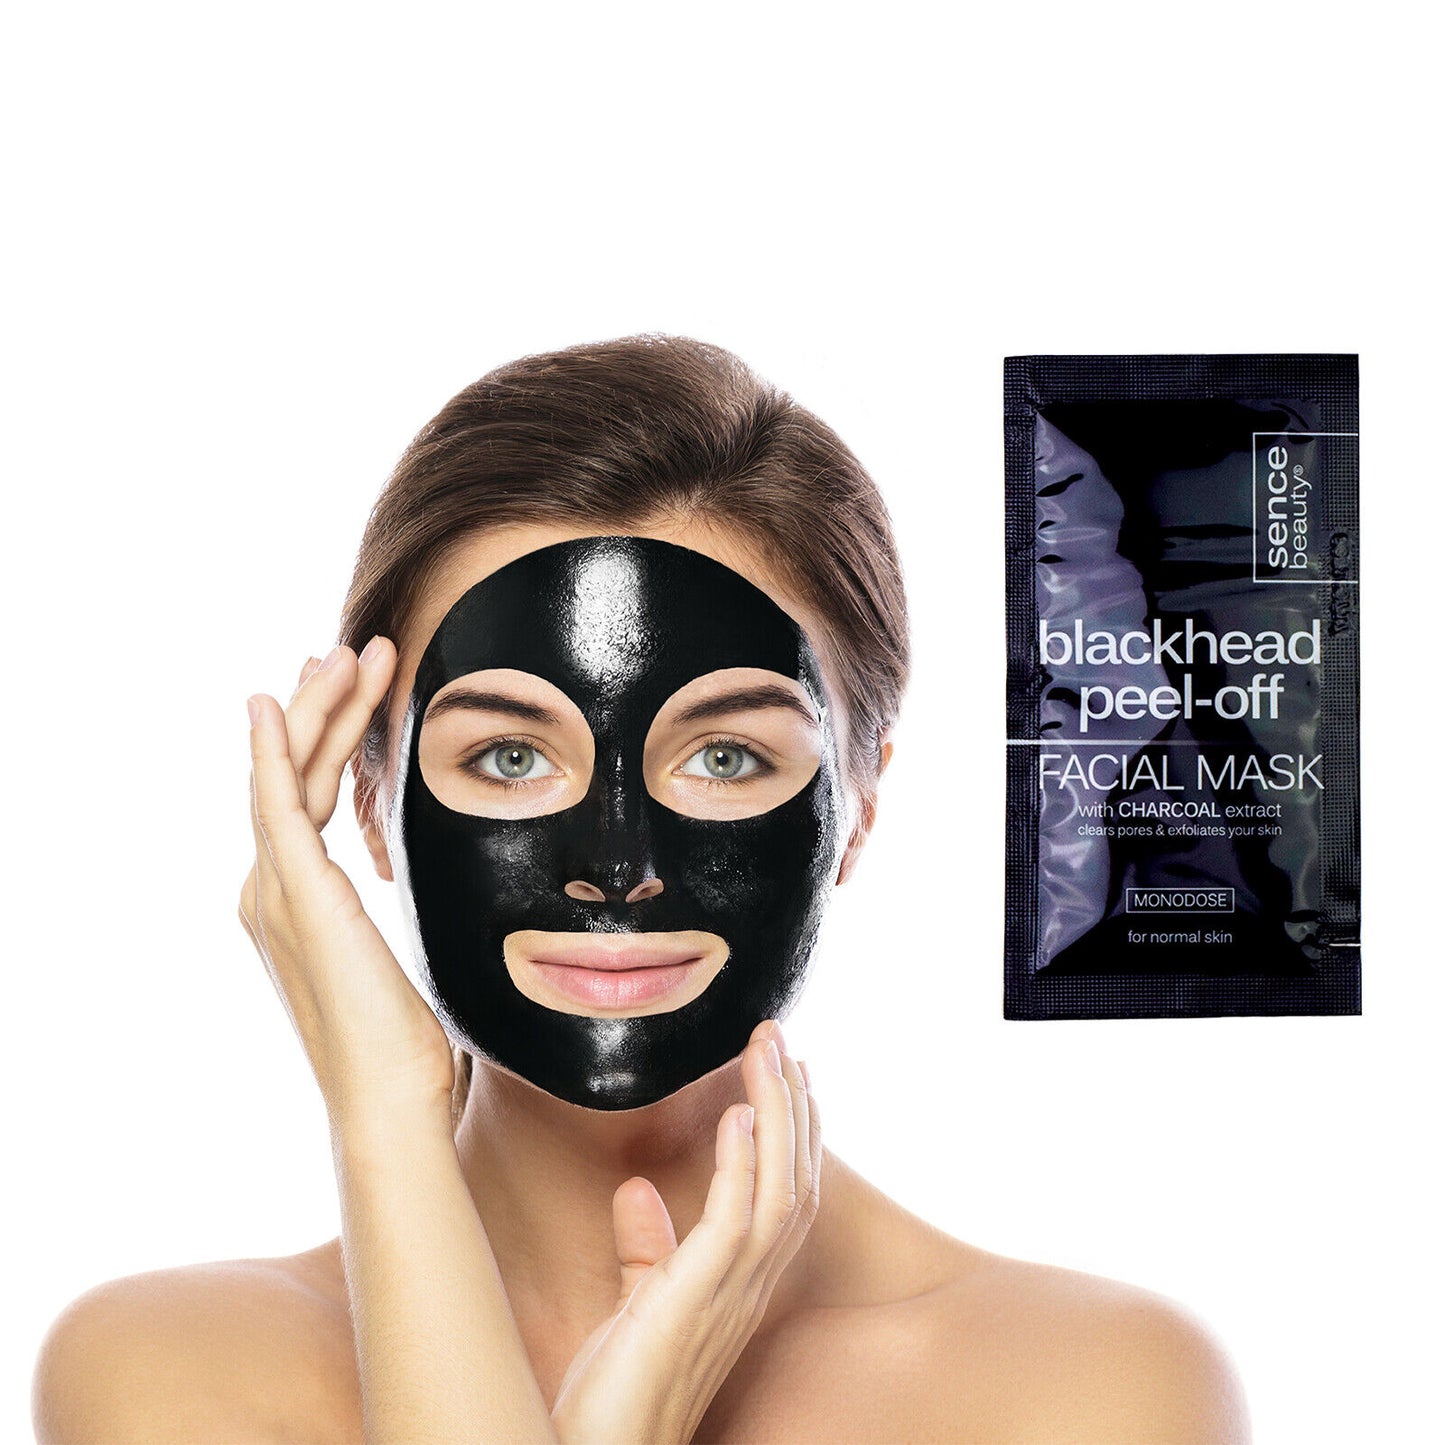 5 x Charcoal Blackhead Peel-Off Facial Mask 5 masks in total